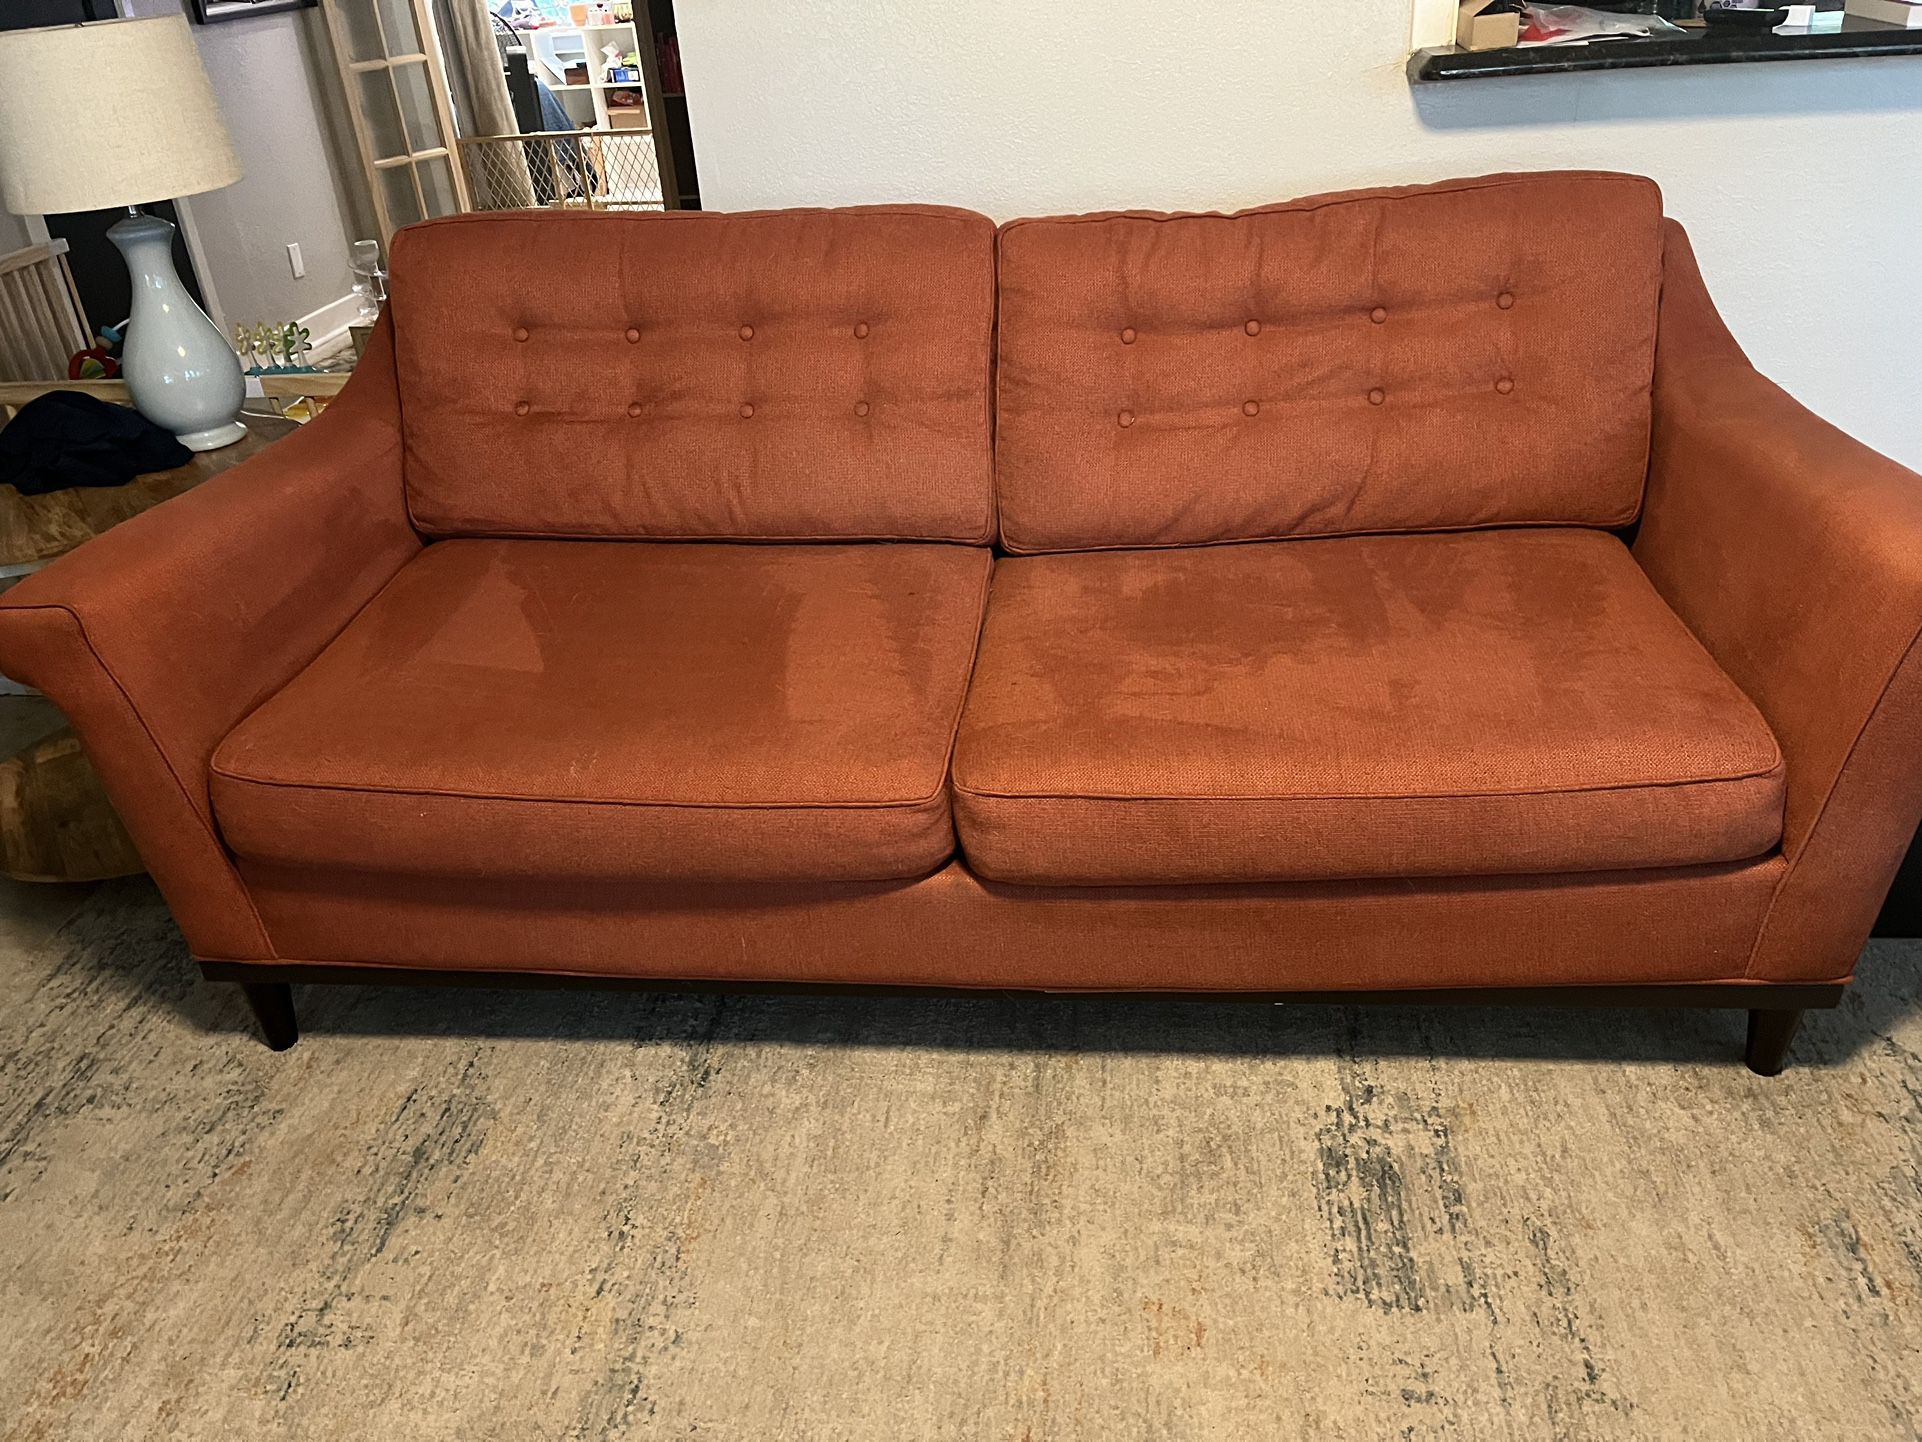 Large Orange Couch / Sofa